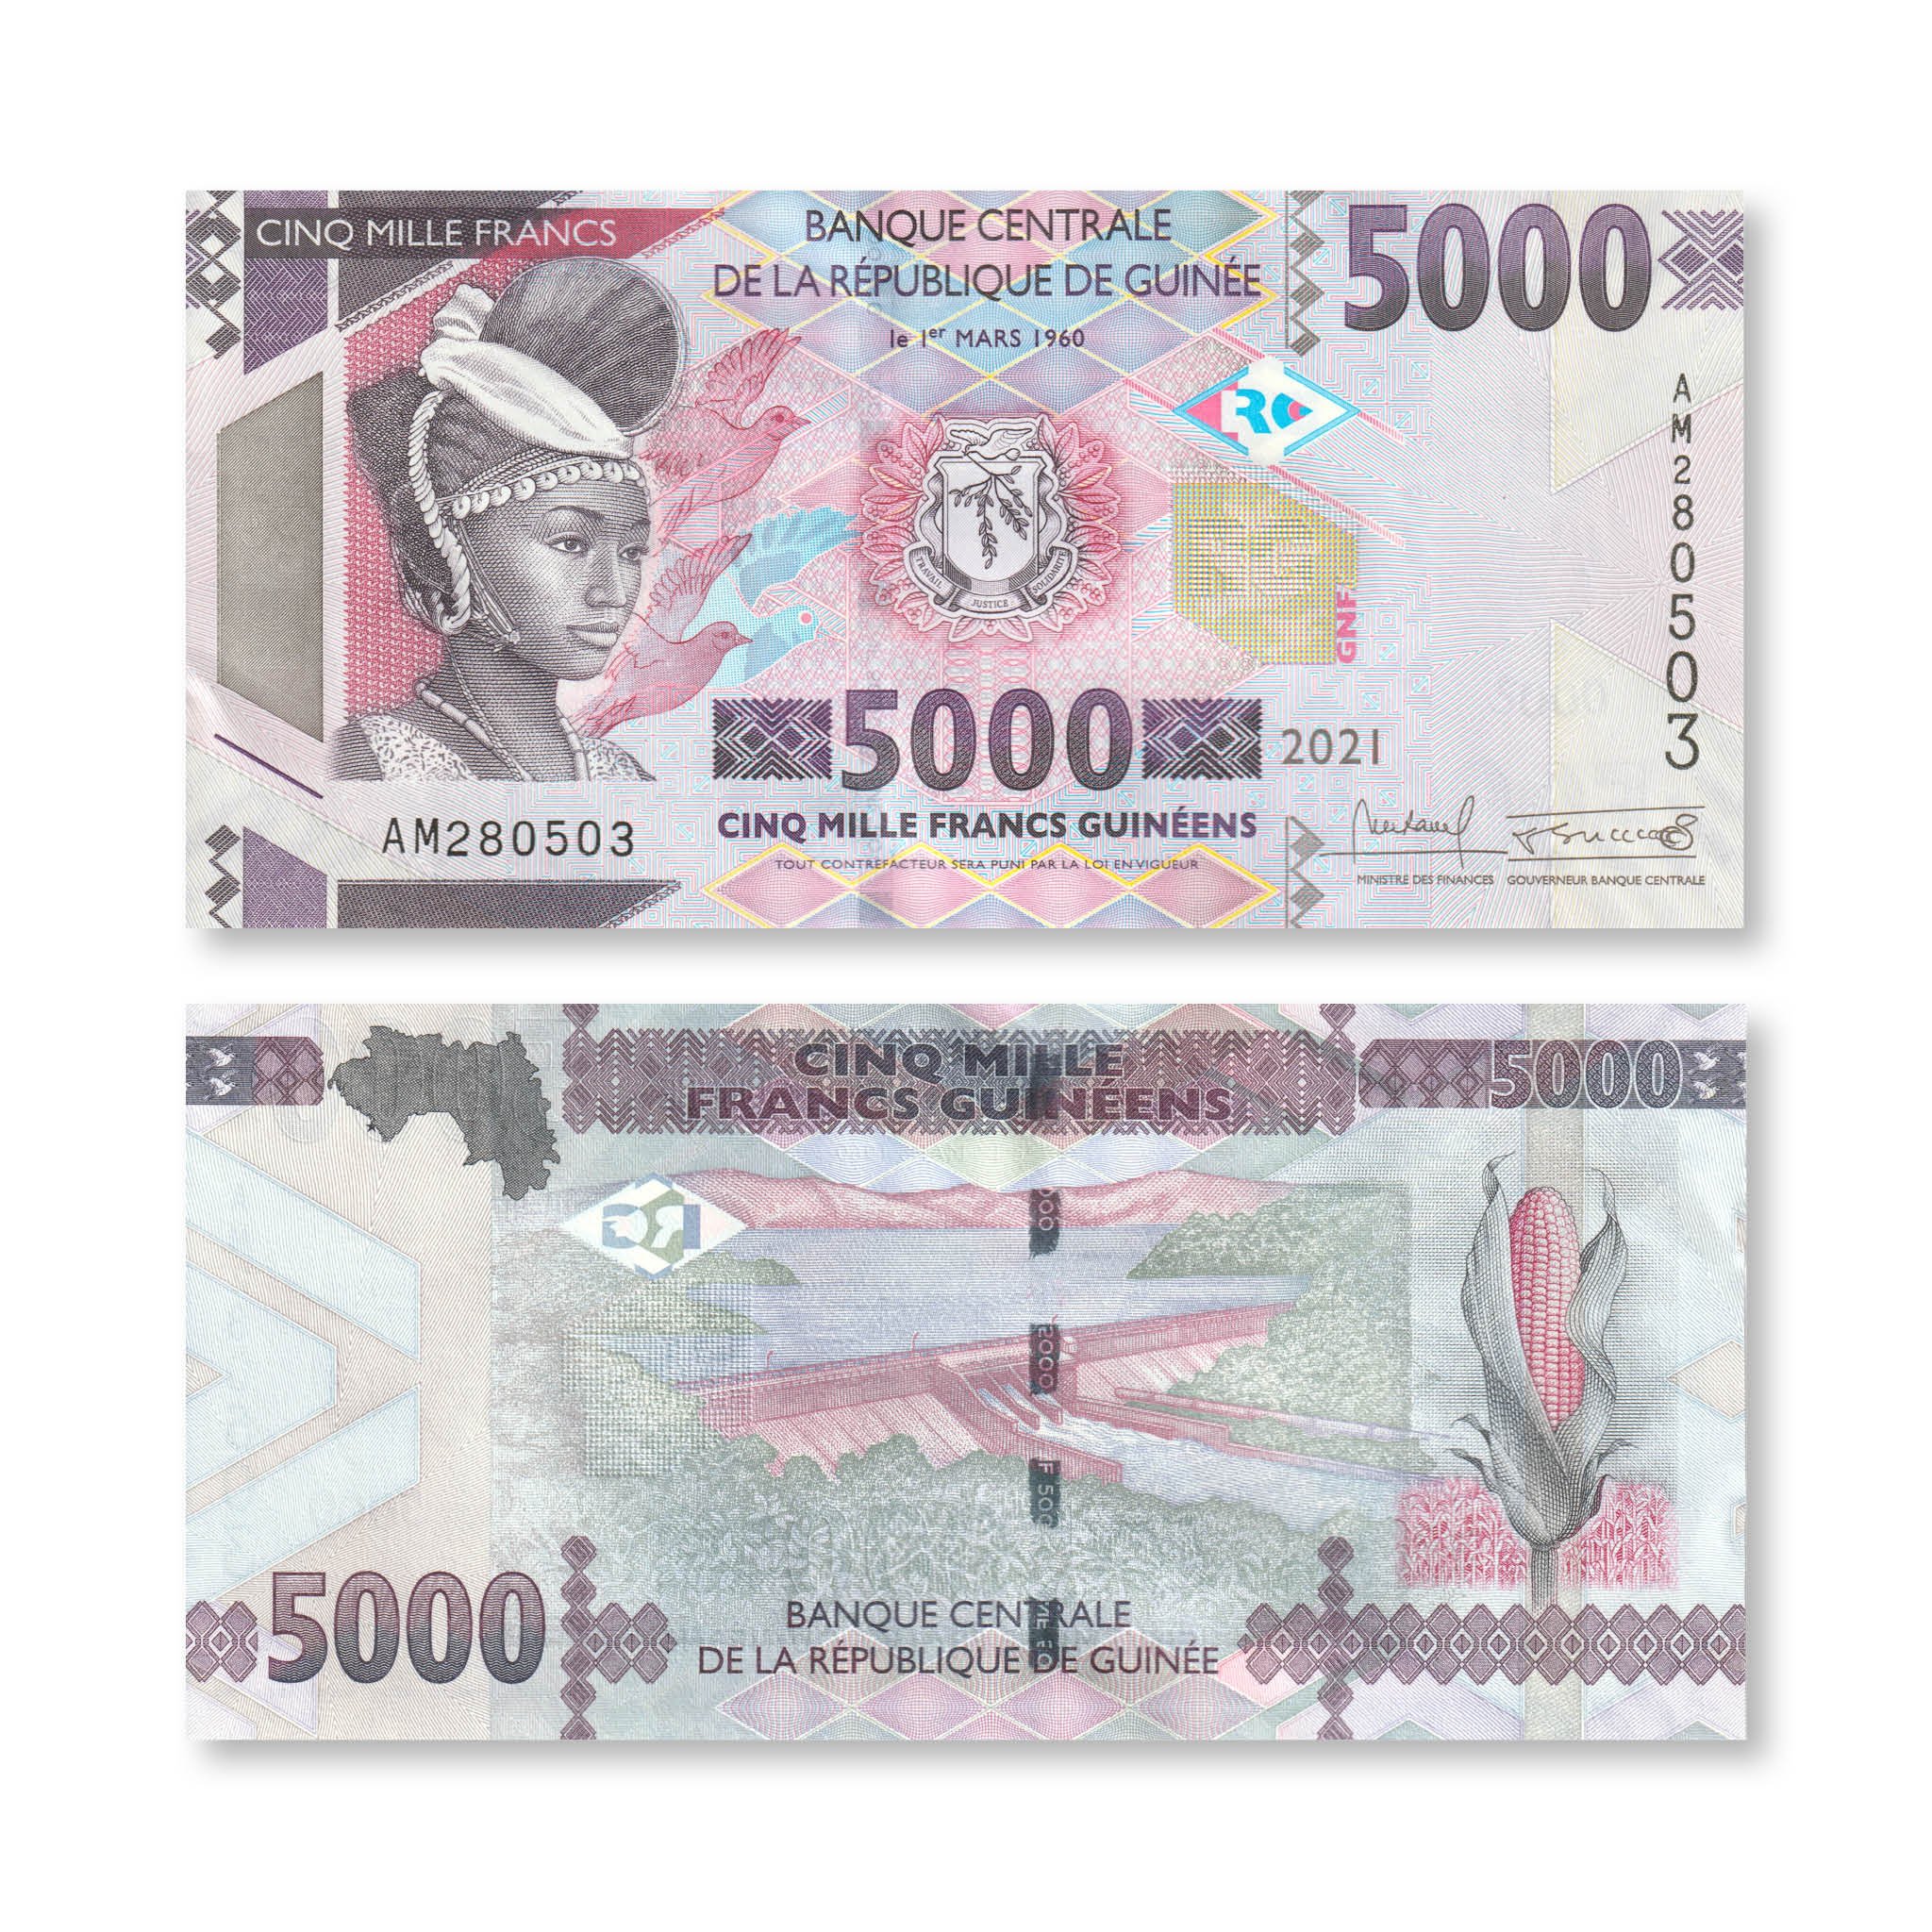 Guinea 5000 Francs, 2021, B340c, P49, UNC - Robert's World Money - World Banknotes